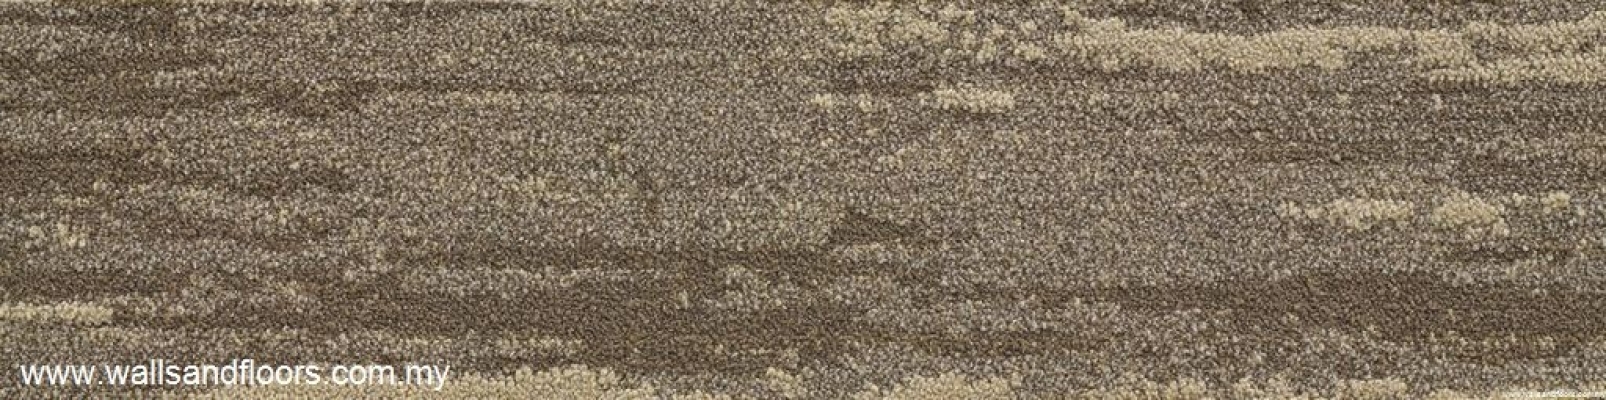 Carpet Model : Season Collection - Season Basic 1-1